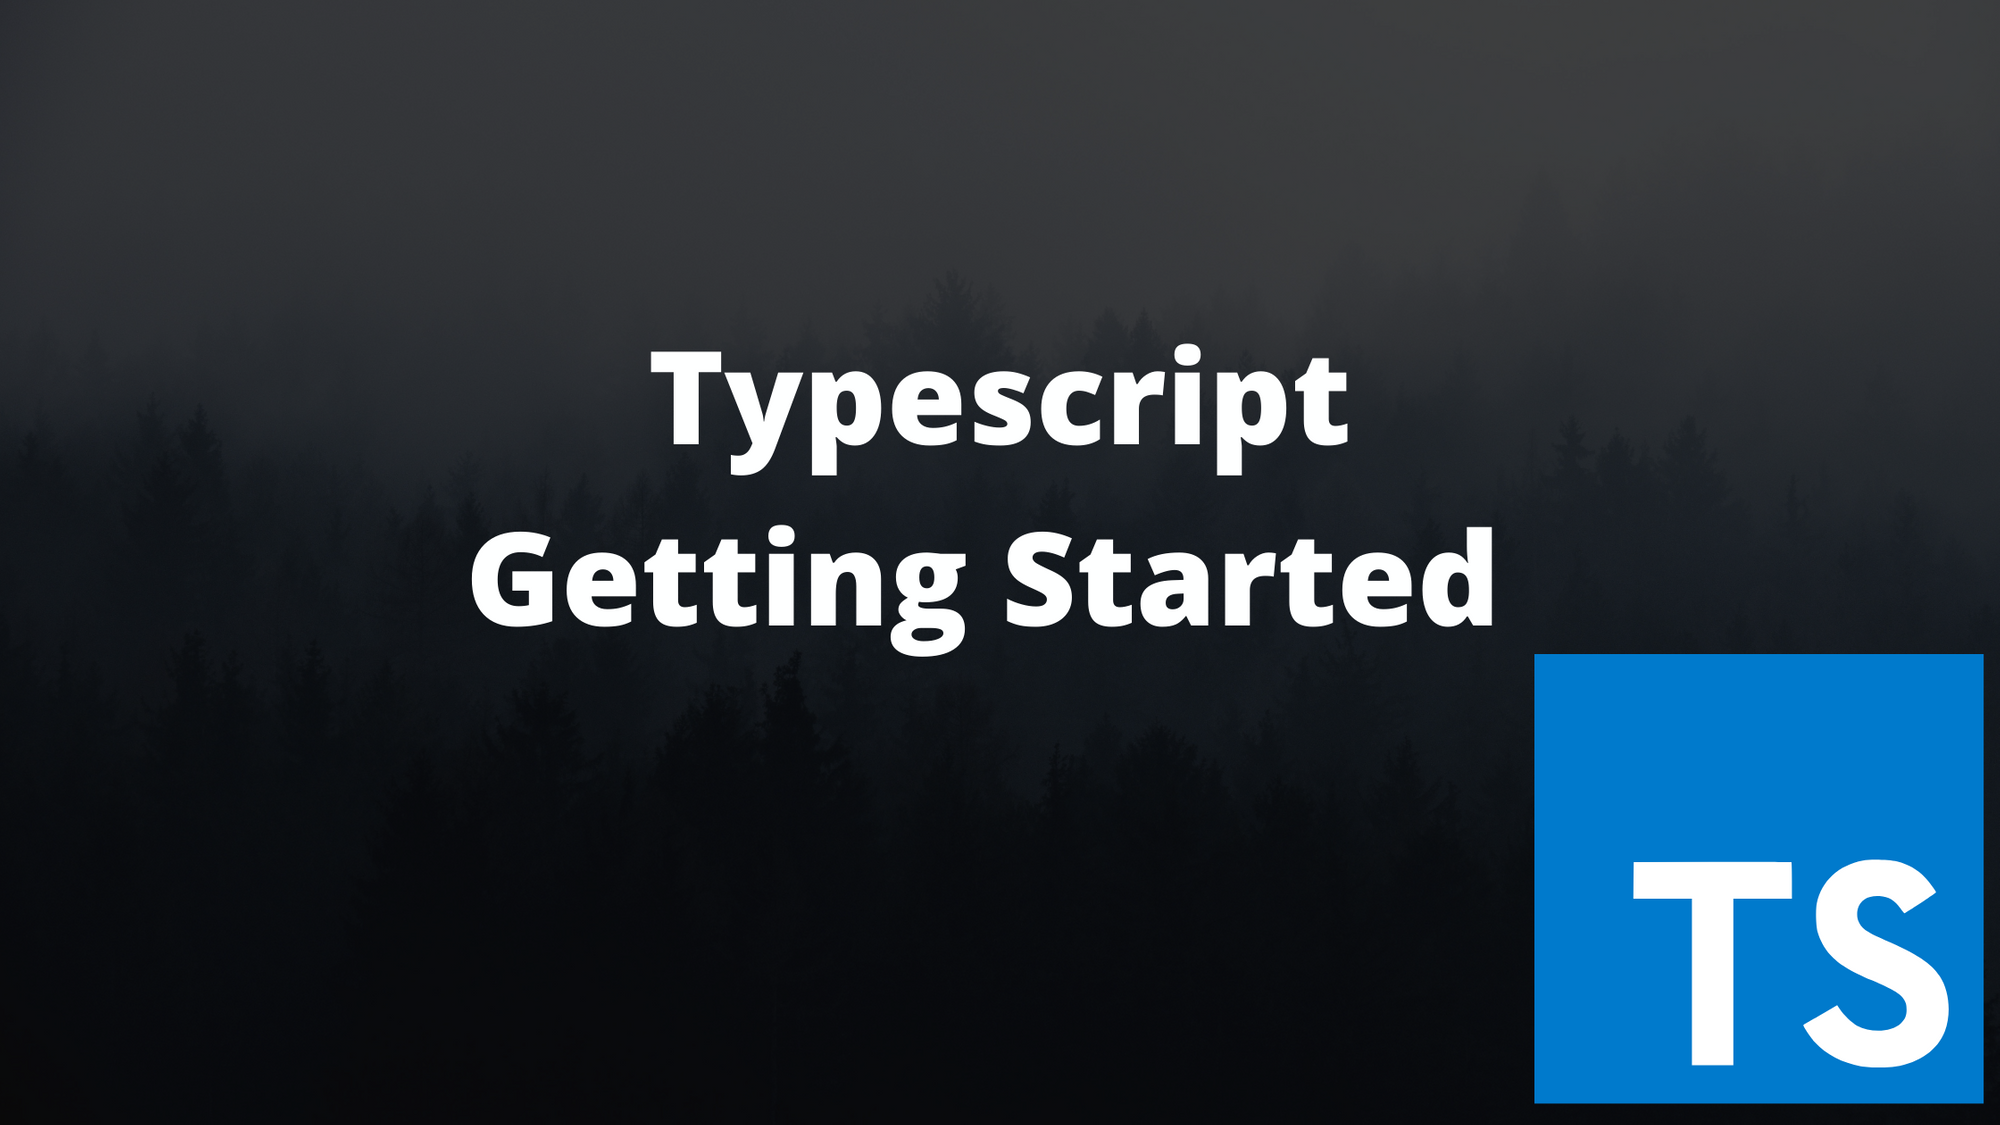 Learn TypeScript Basics in this Beginner's Guide